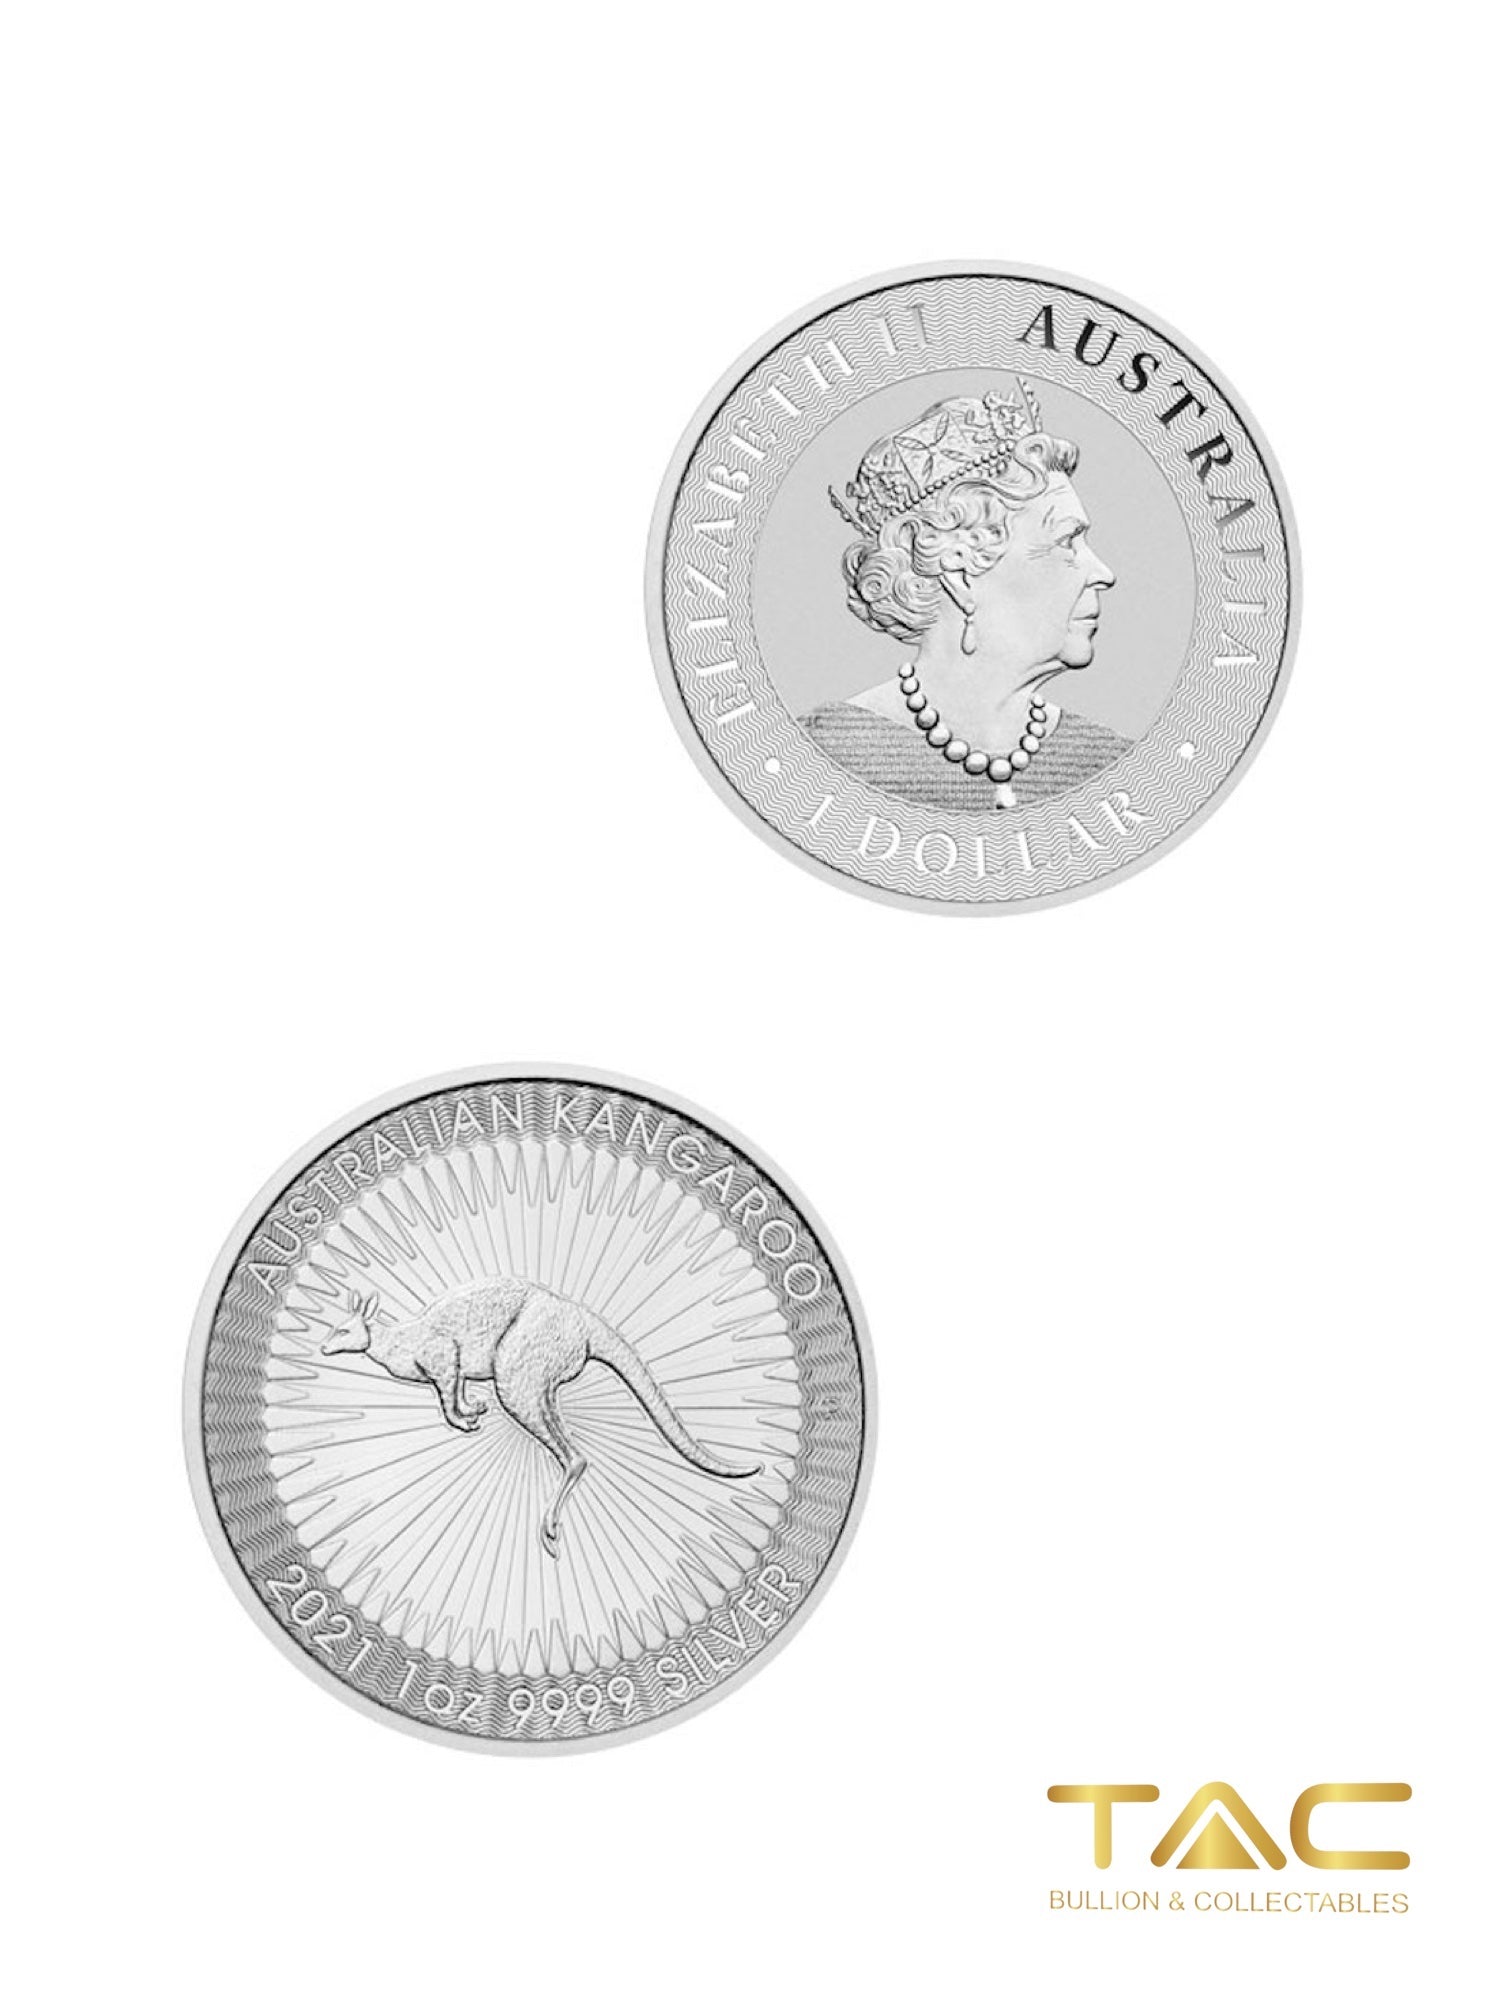 1 oz Silver Coin - 2021 Kangaroo - Perth Mint